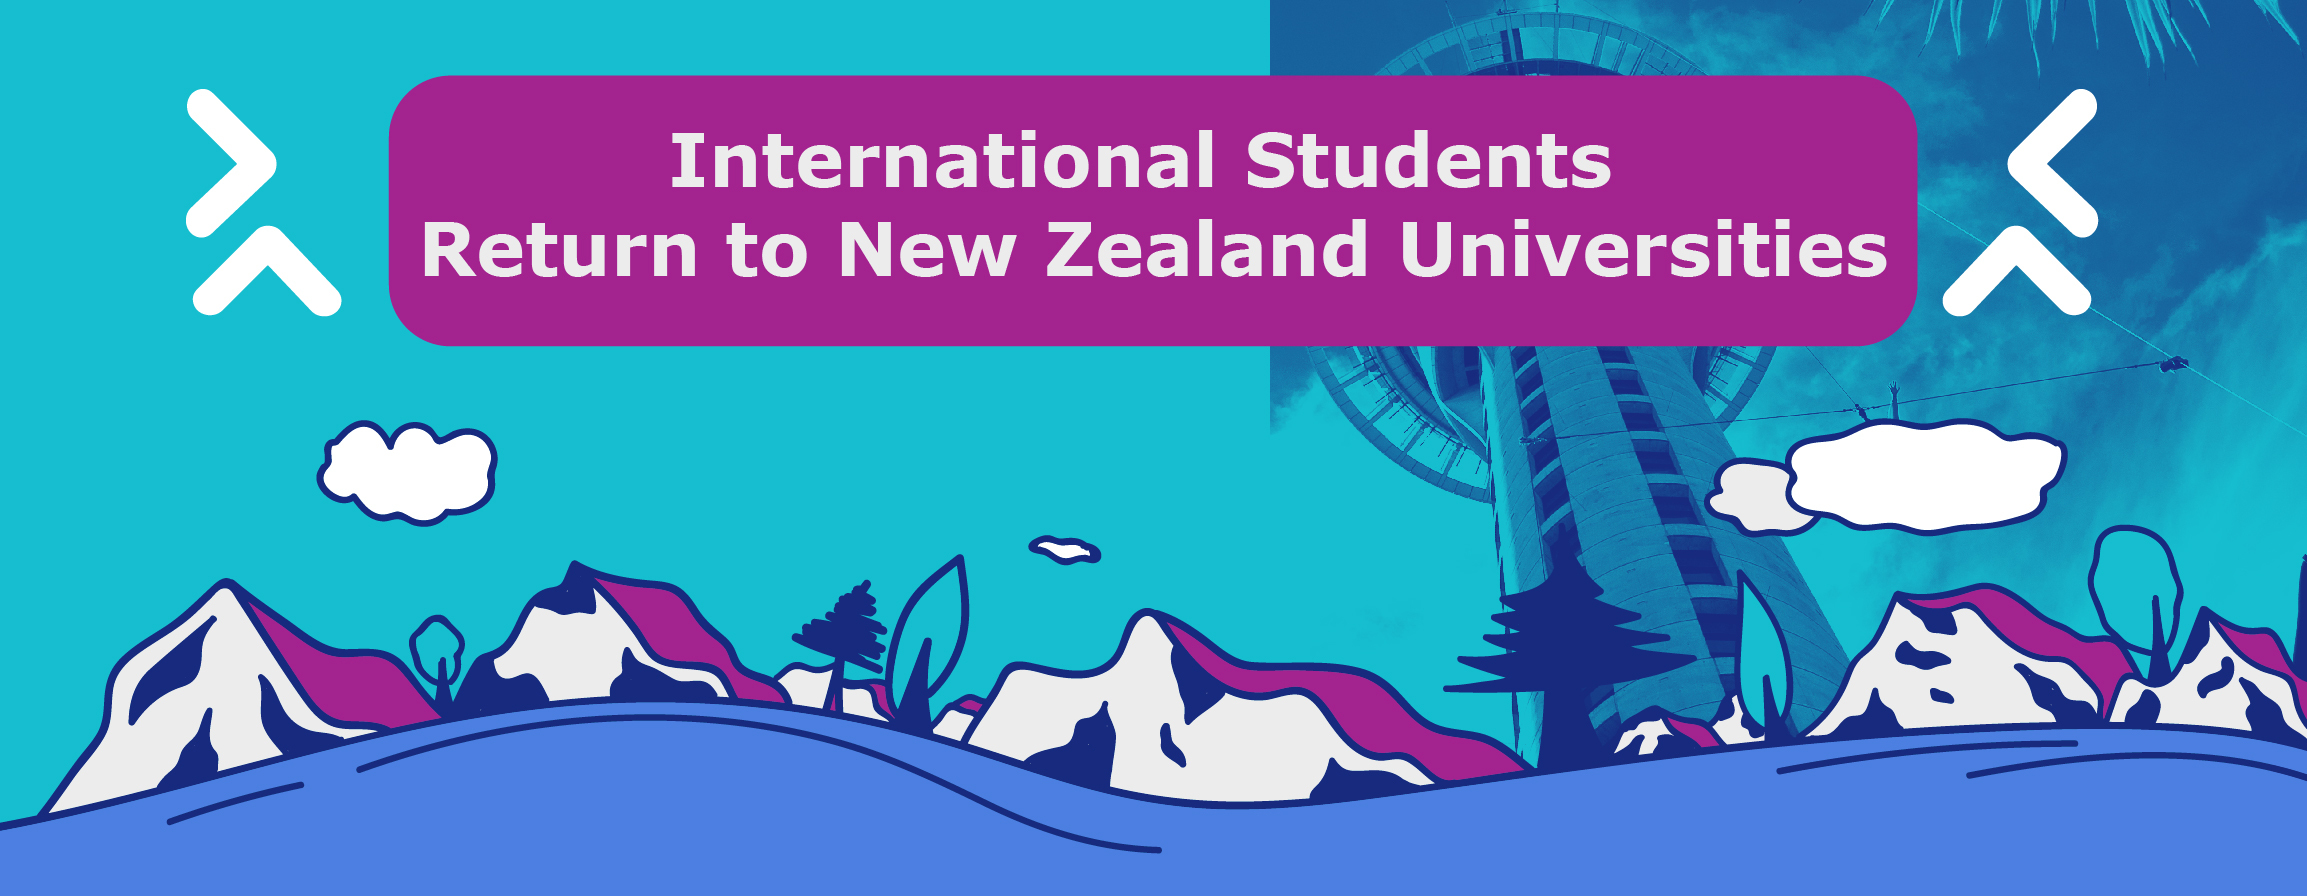 International Students Return to New Zealand Universities